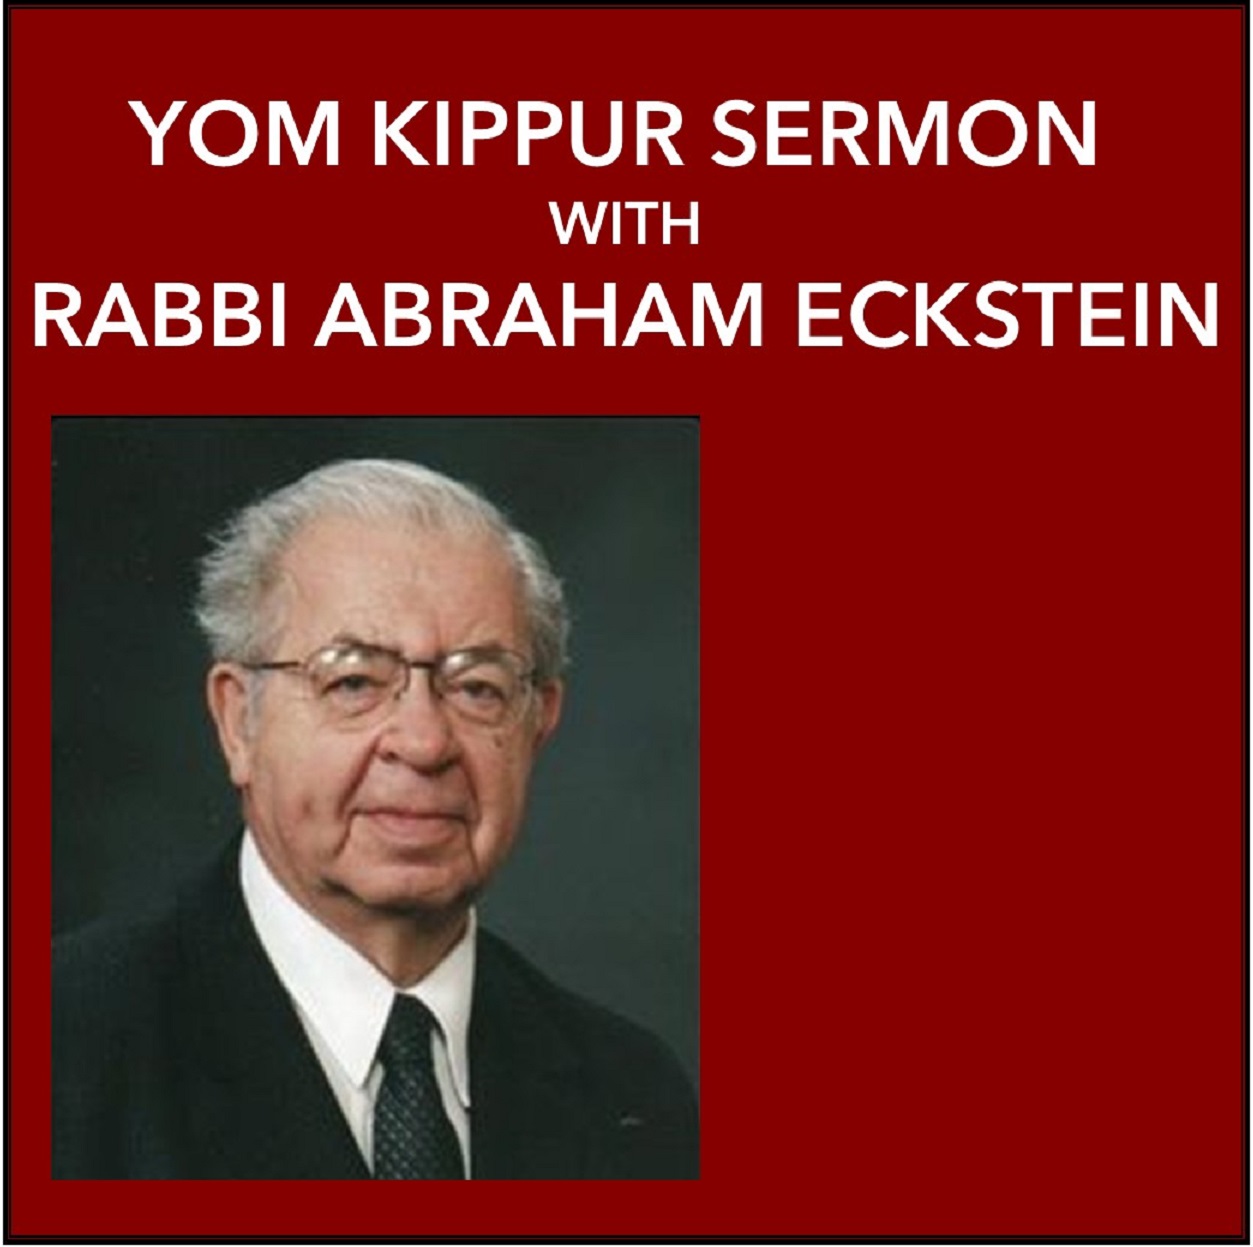 Yom Kippur Sermon with Rabbi Abraham Eckstein